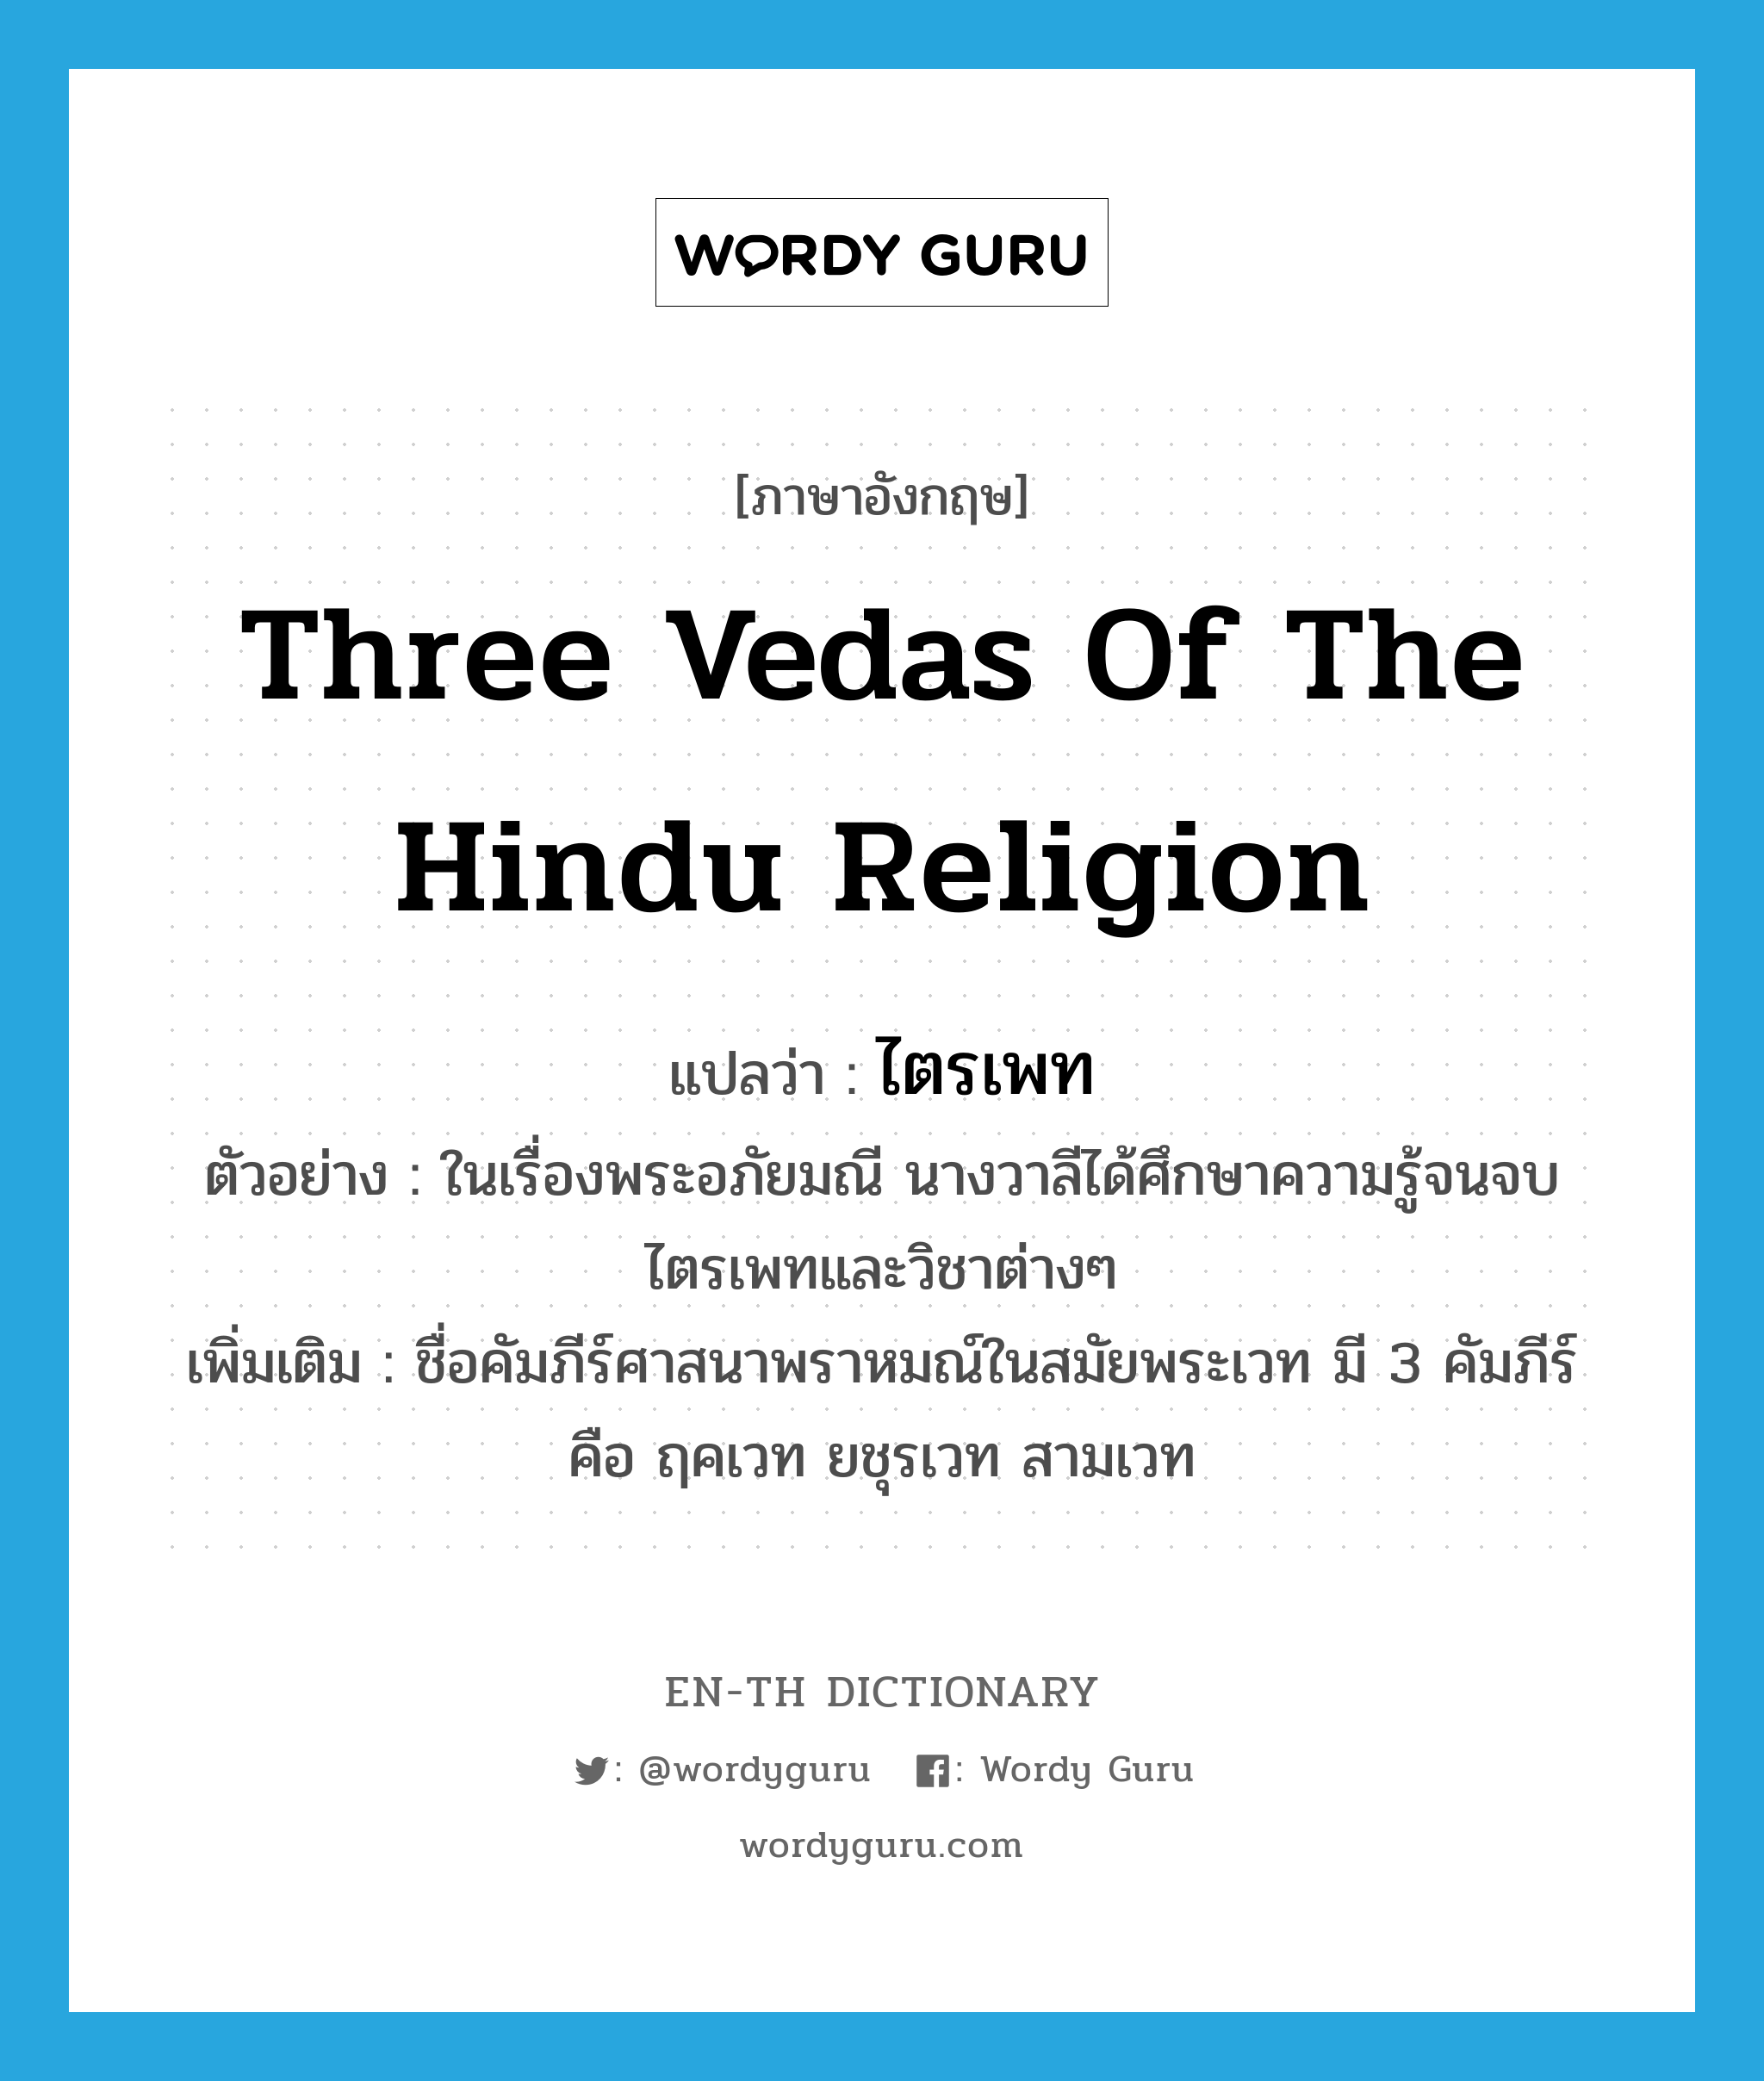 Three Vedas of the Hindu religion